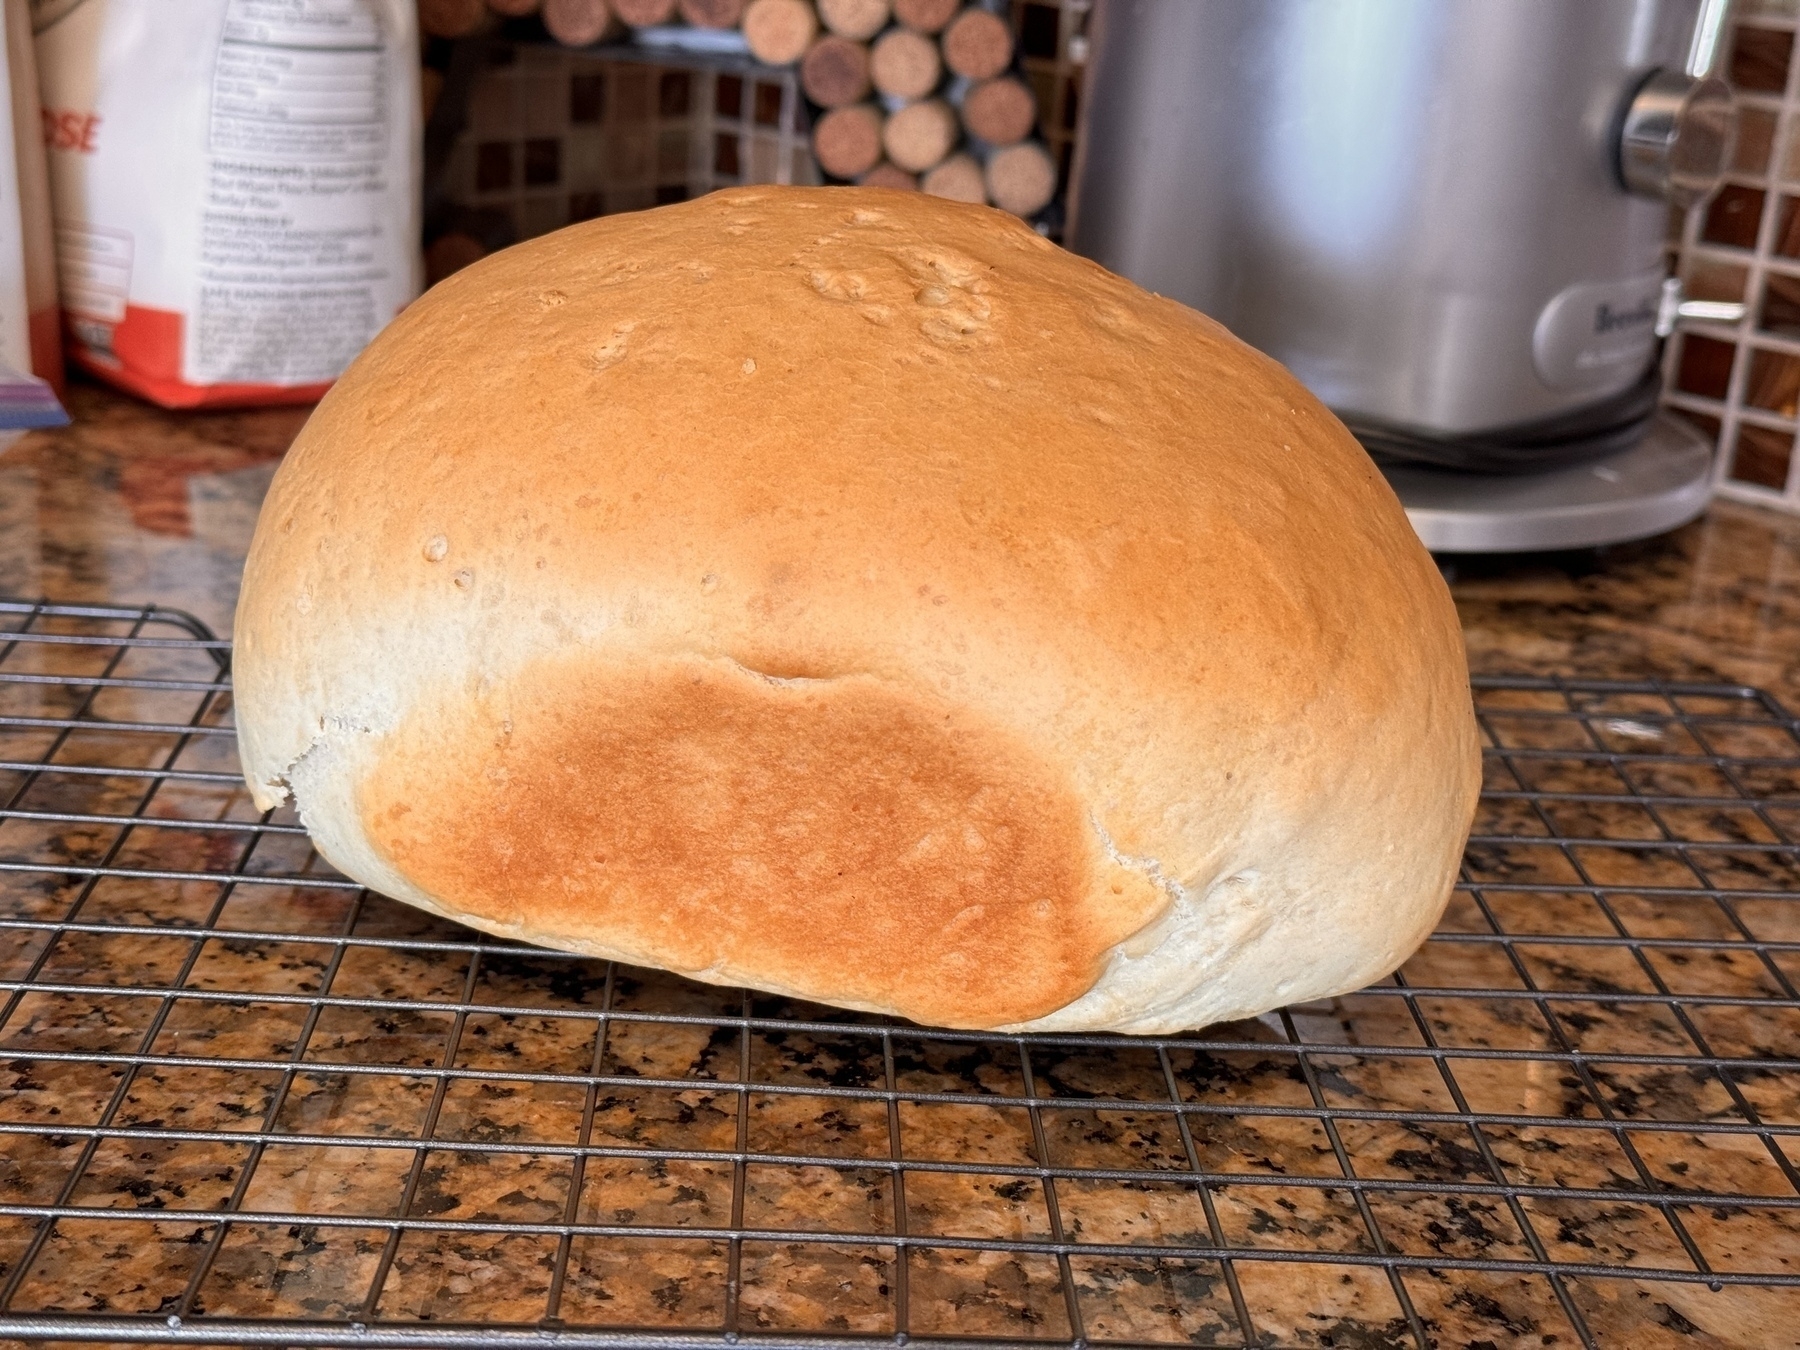 Baked loaf of bread